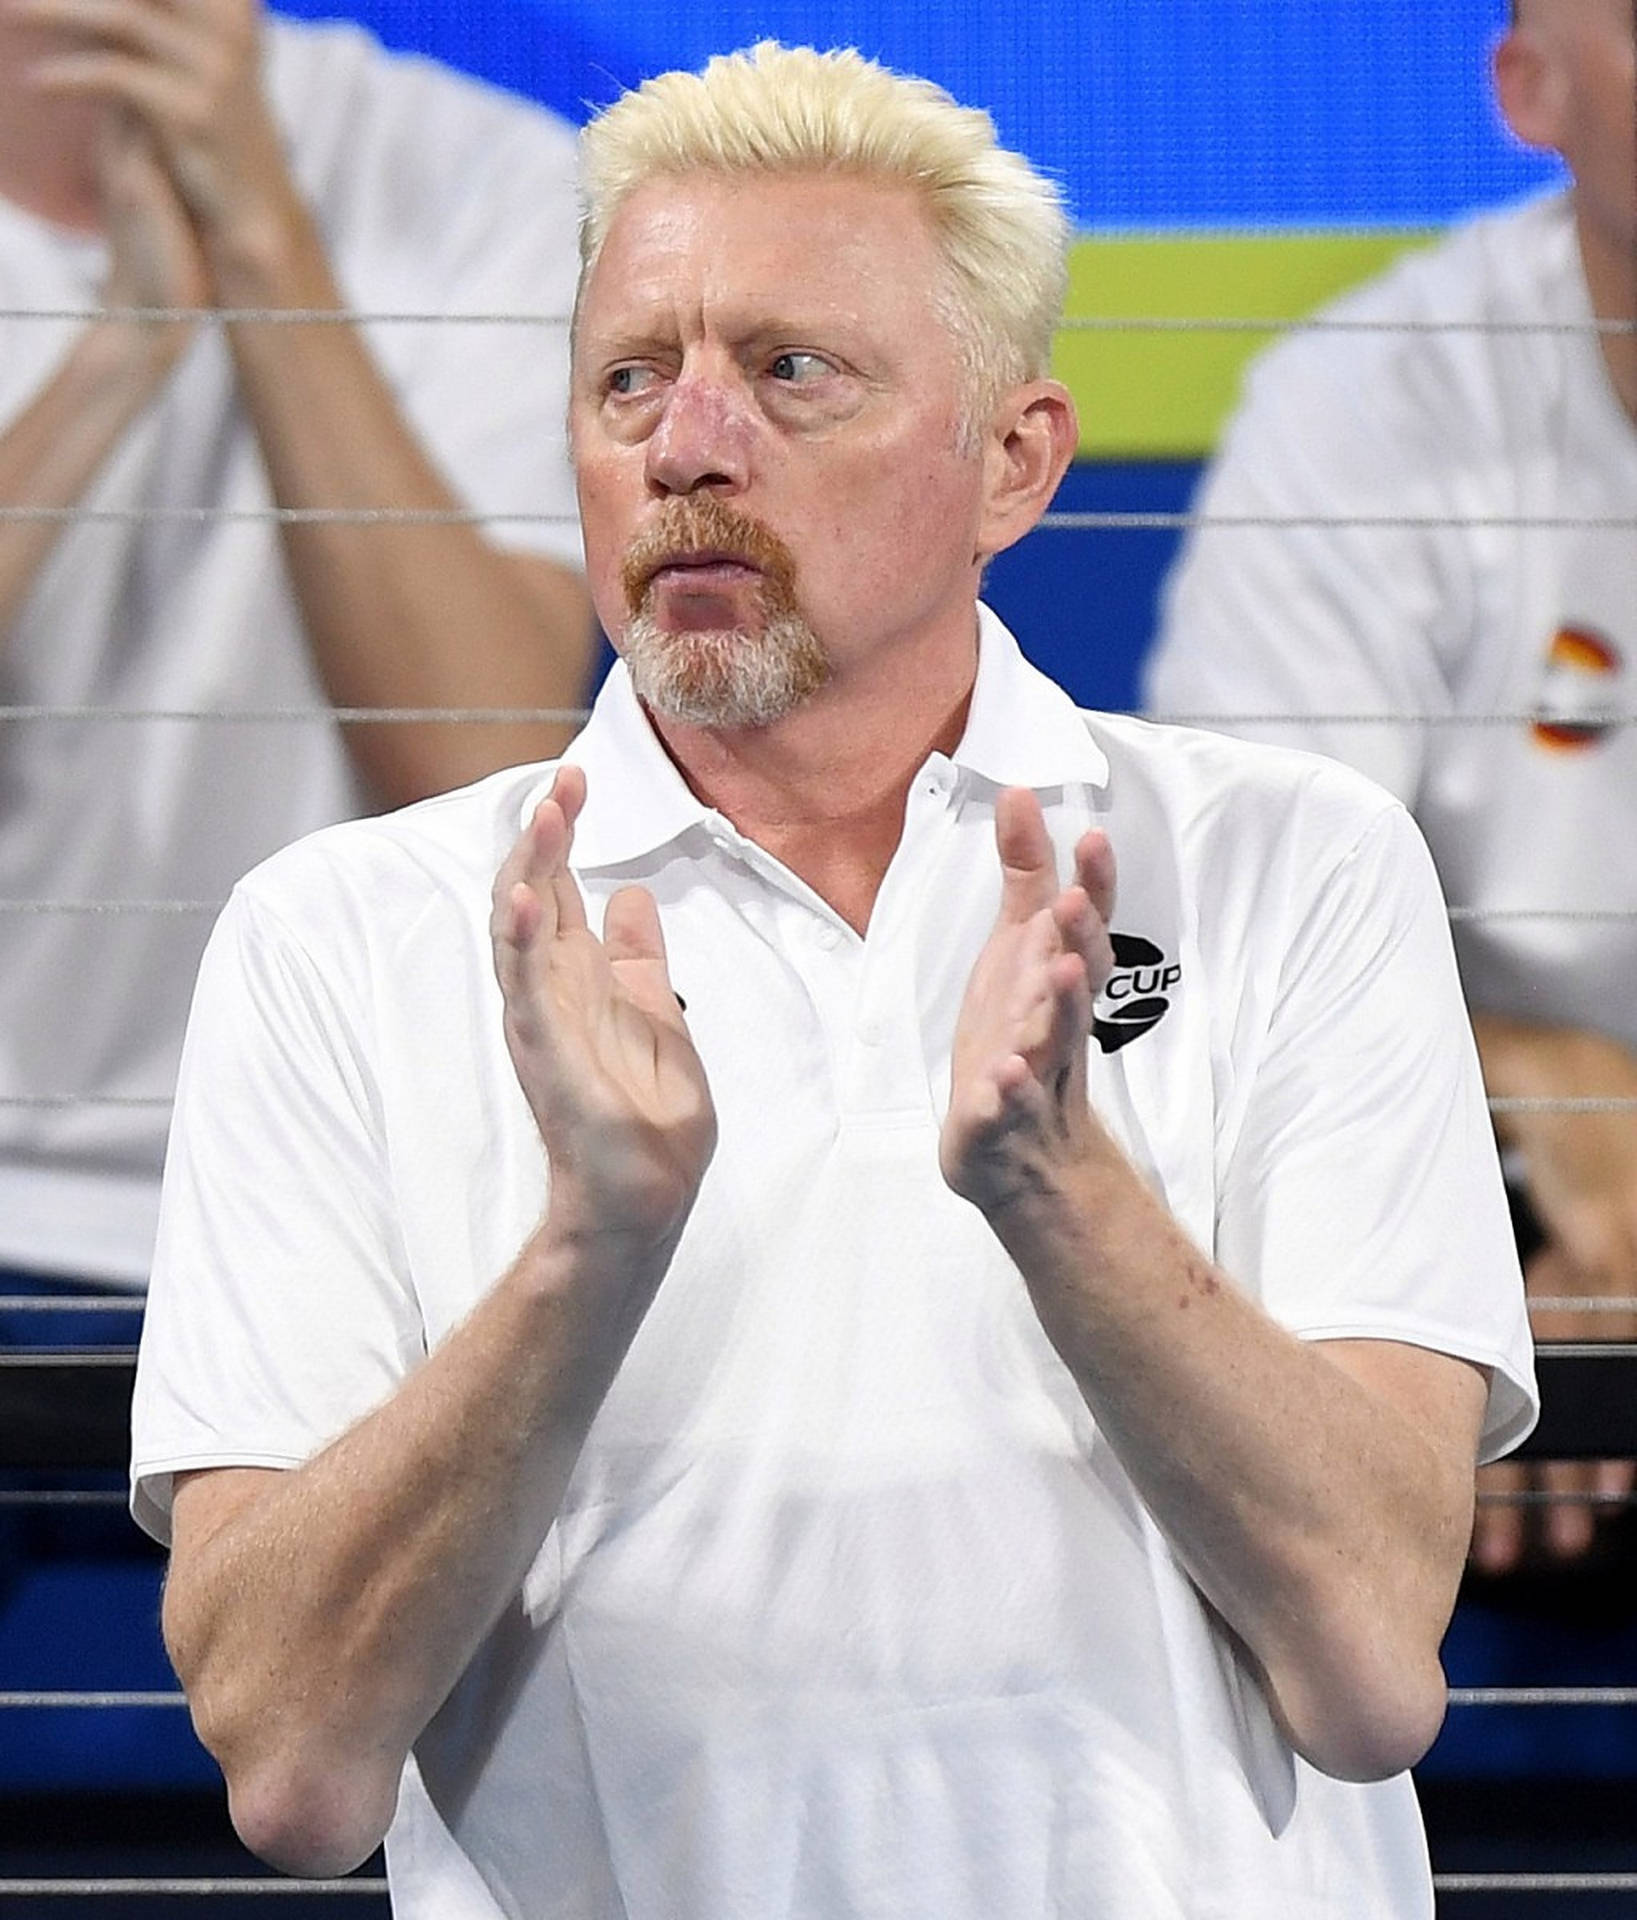 Cheering Boris Becker Background